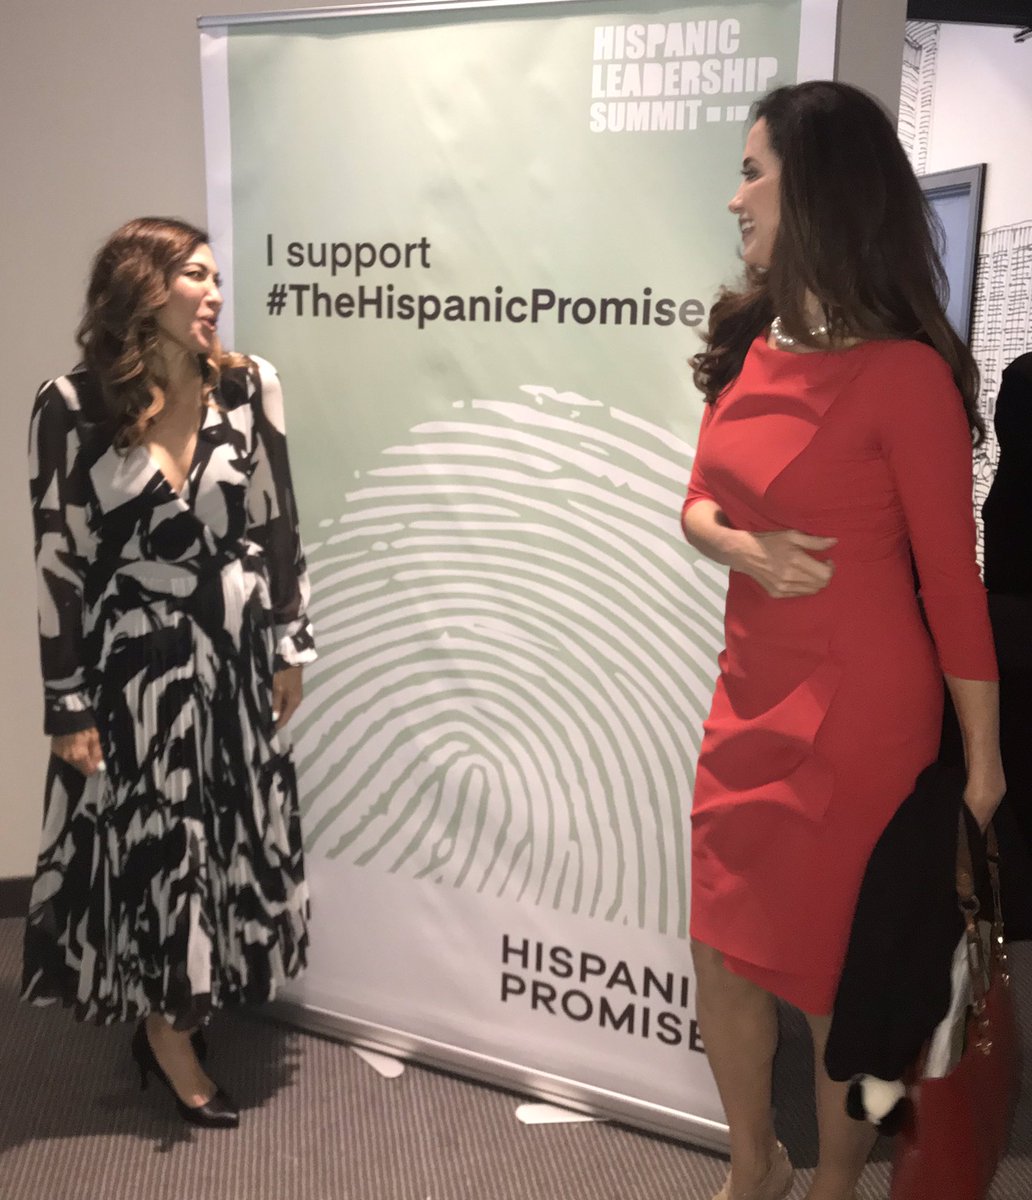 Stacie De Armas (left) speaking with Claudia Romo Edelman (right) at the Hispanic Leadership Summit. Photo Courtesy of The Hispanic Leadership Summit